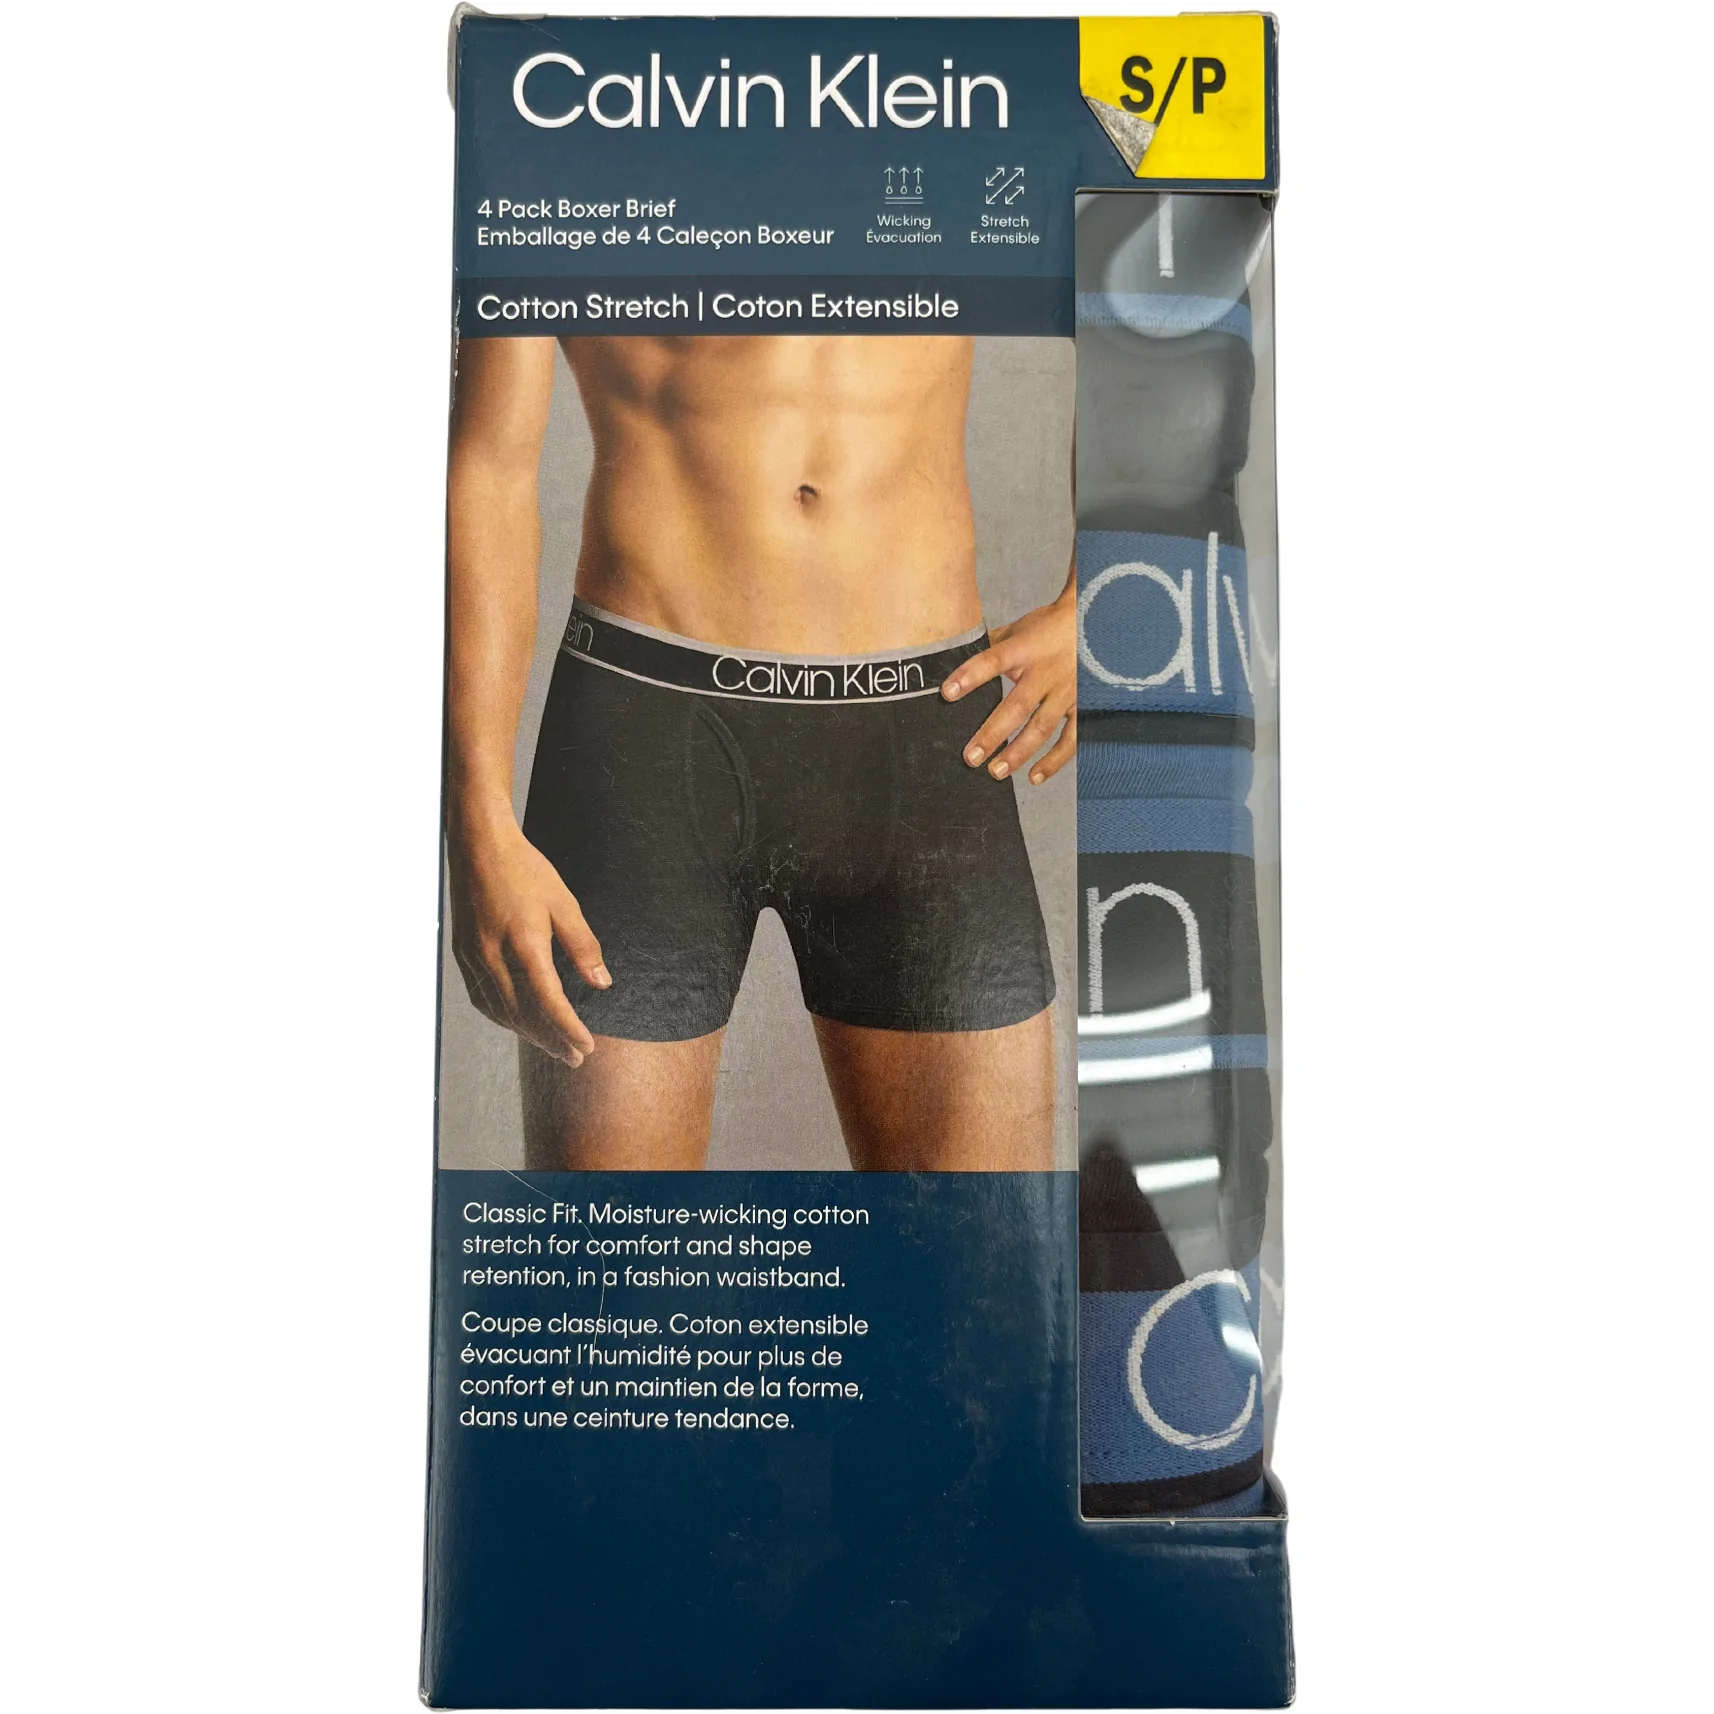 Calvin Klein Men's Boxer Briefs: 4 Pack / Navy / Size Small